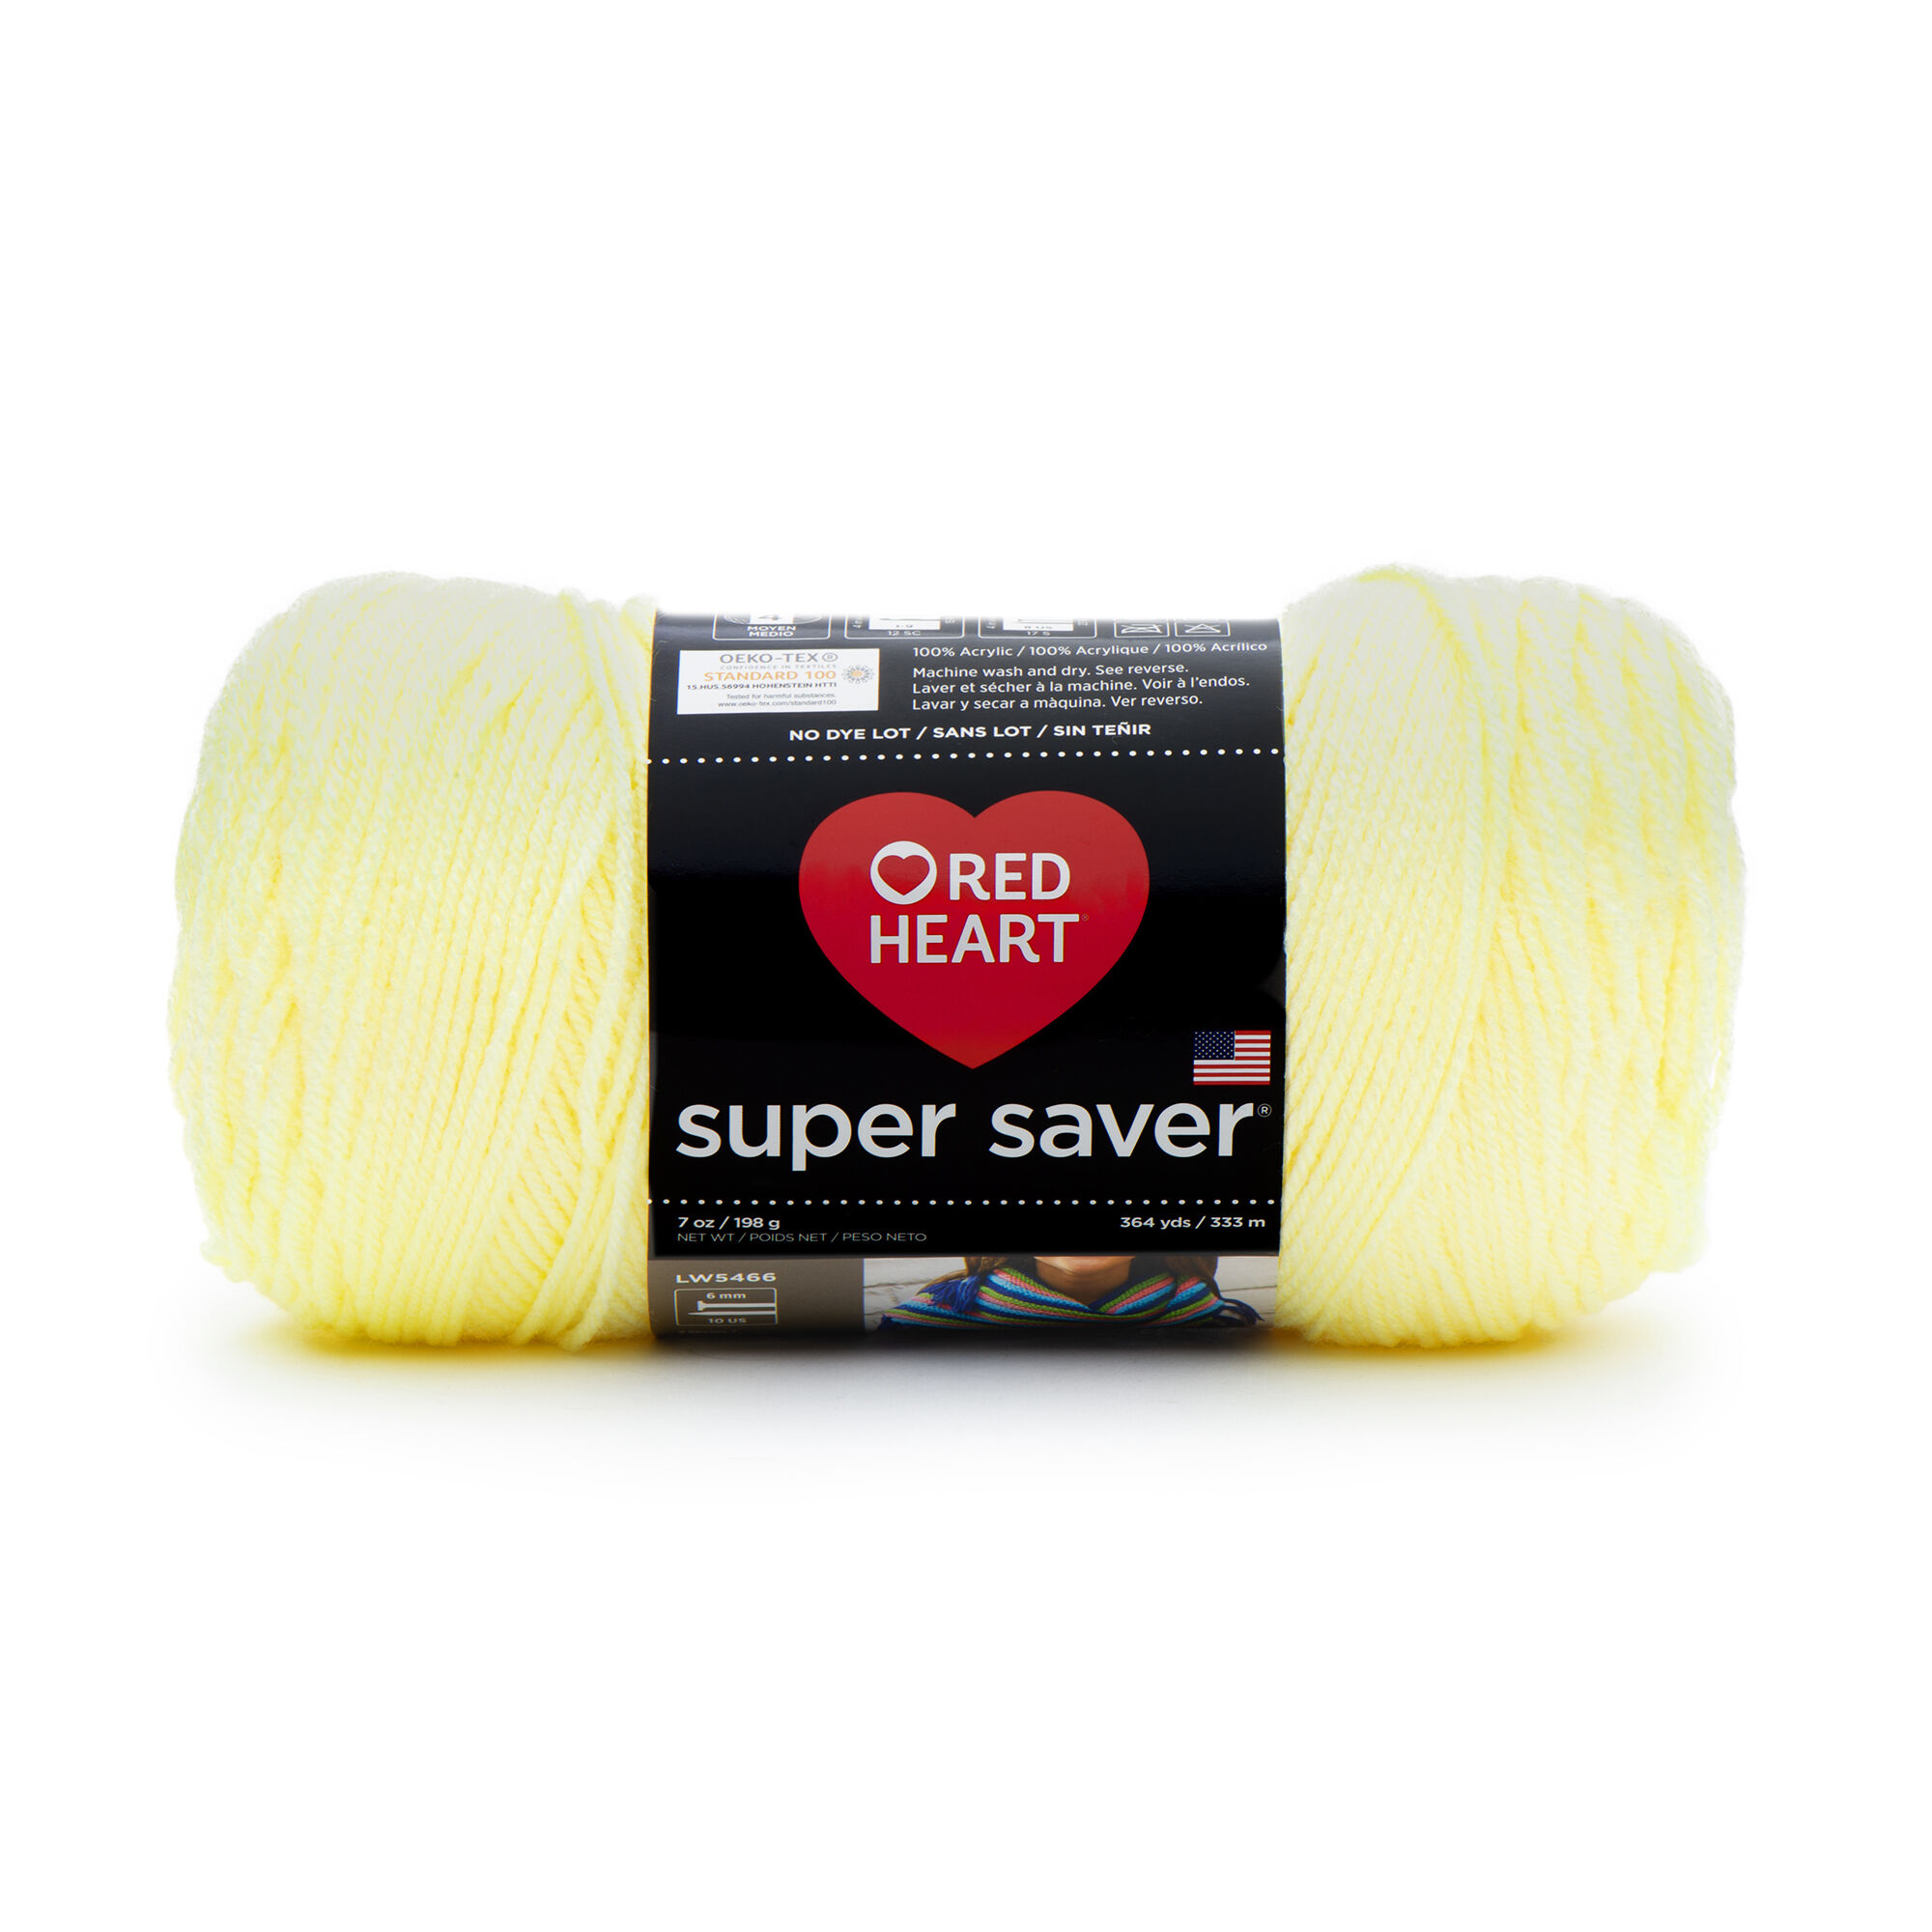 Red Heart Super Saver Medium Acrylic Pale Yellow Yarn, 364 yd - image 1 of 16